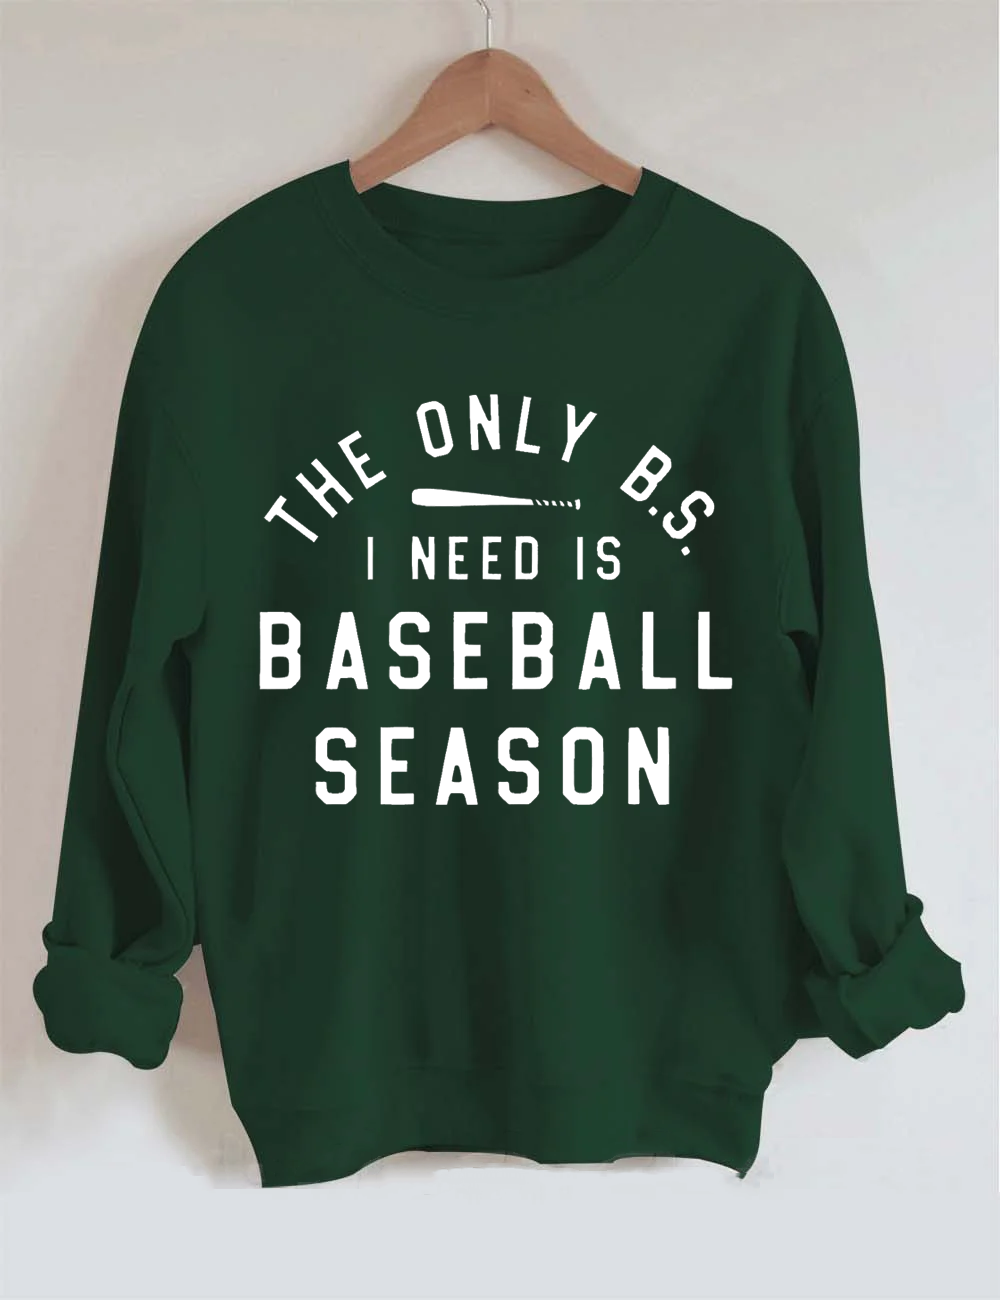 The Only BS I need is Baseball Season Sweatshirt